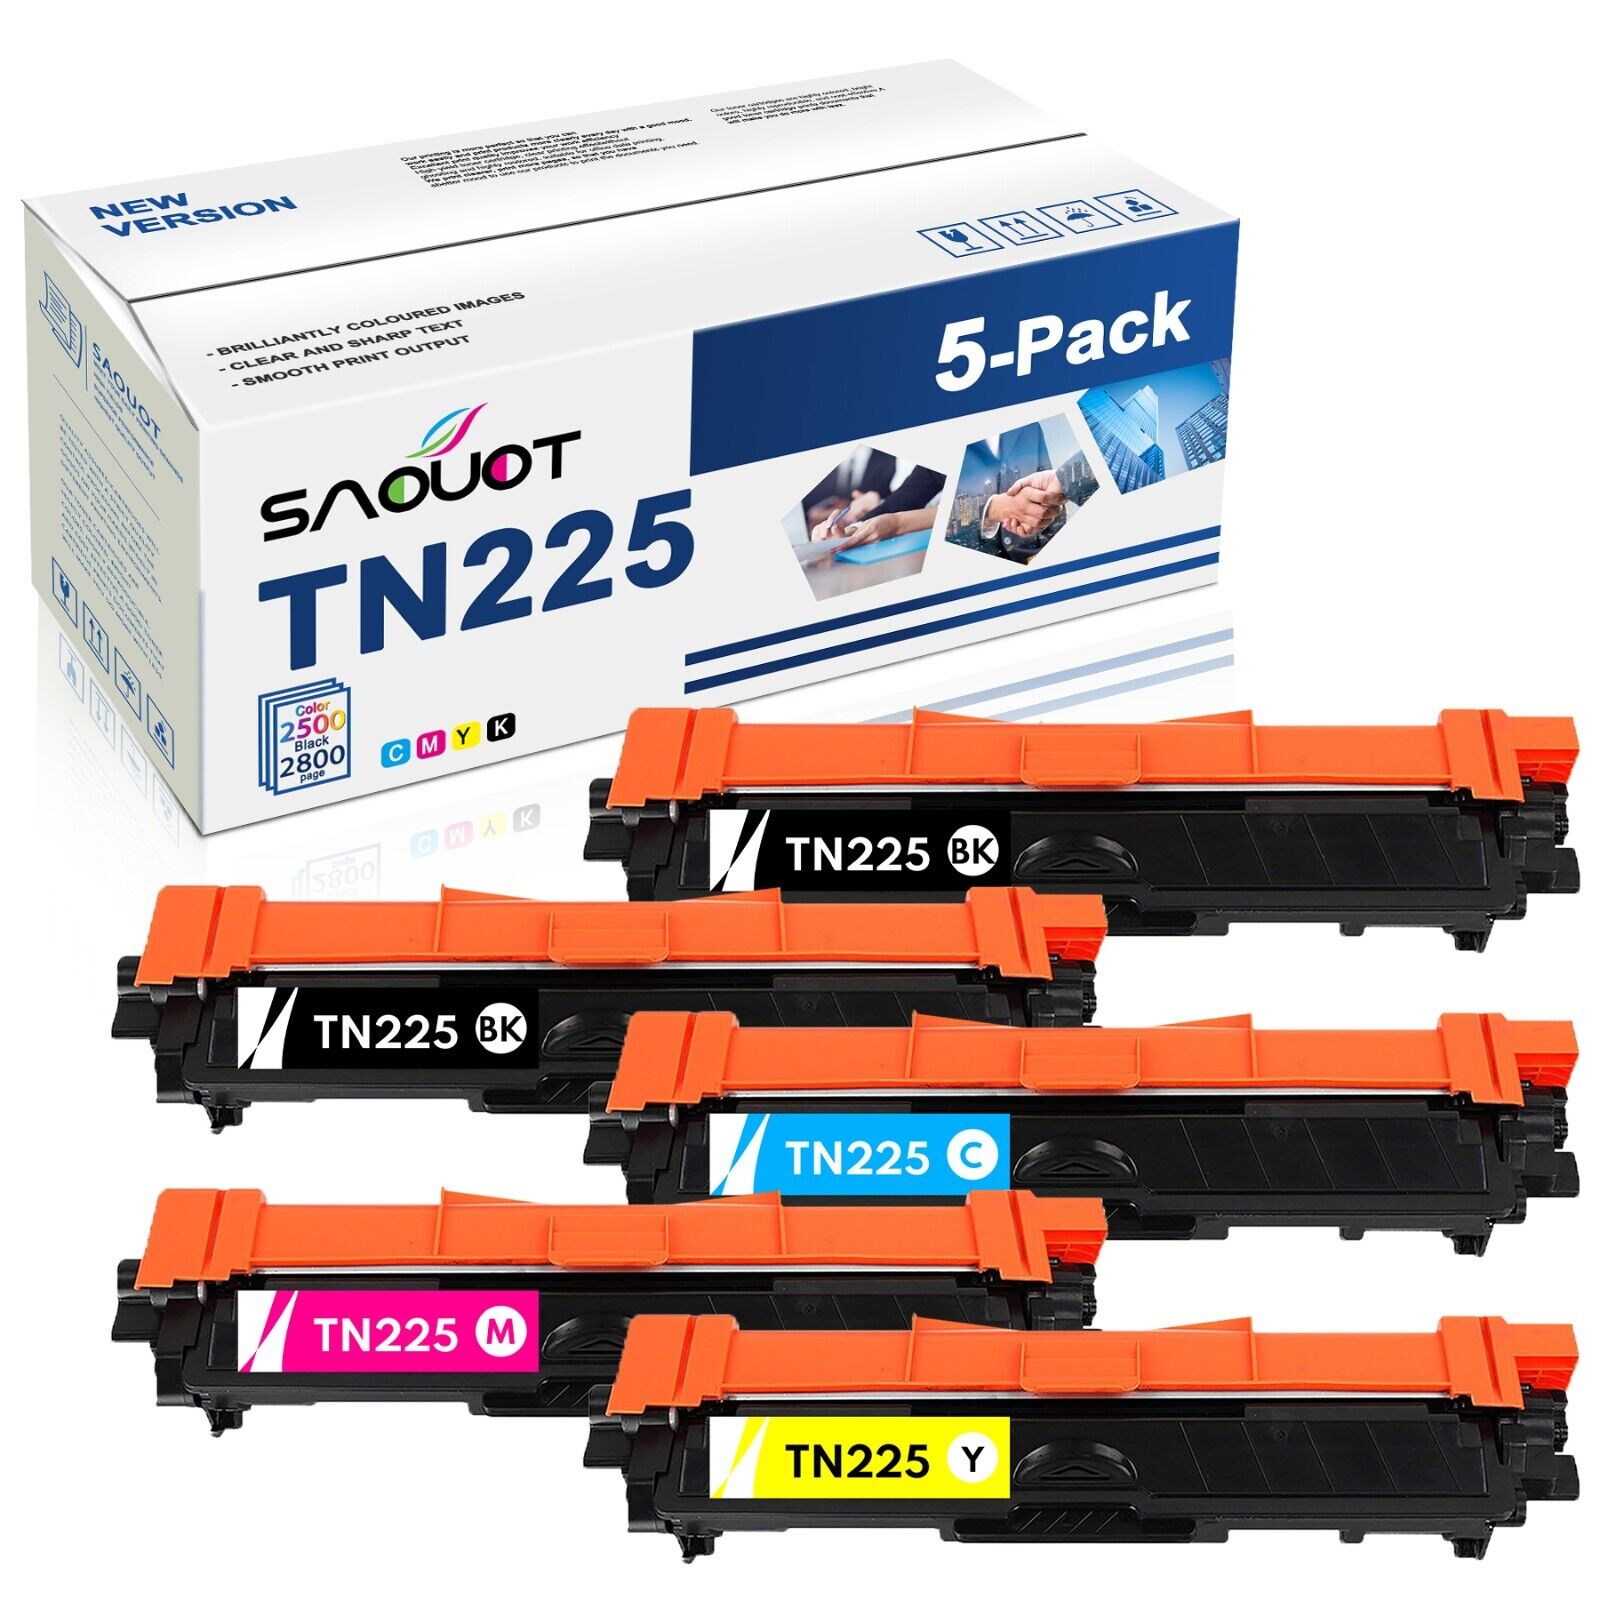 TN225 Toner Cartridge Replacement for Brother TN-225 TN 225 MFC-9140CDN 5 PK